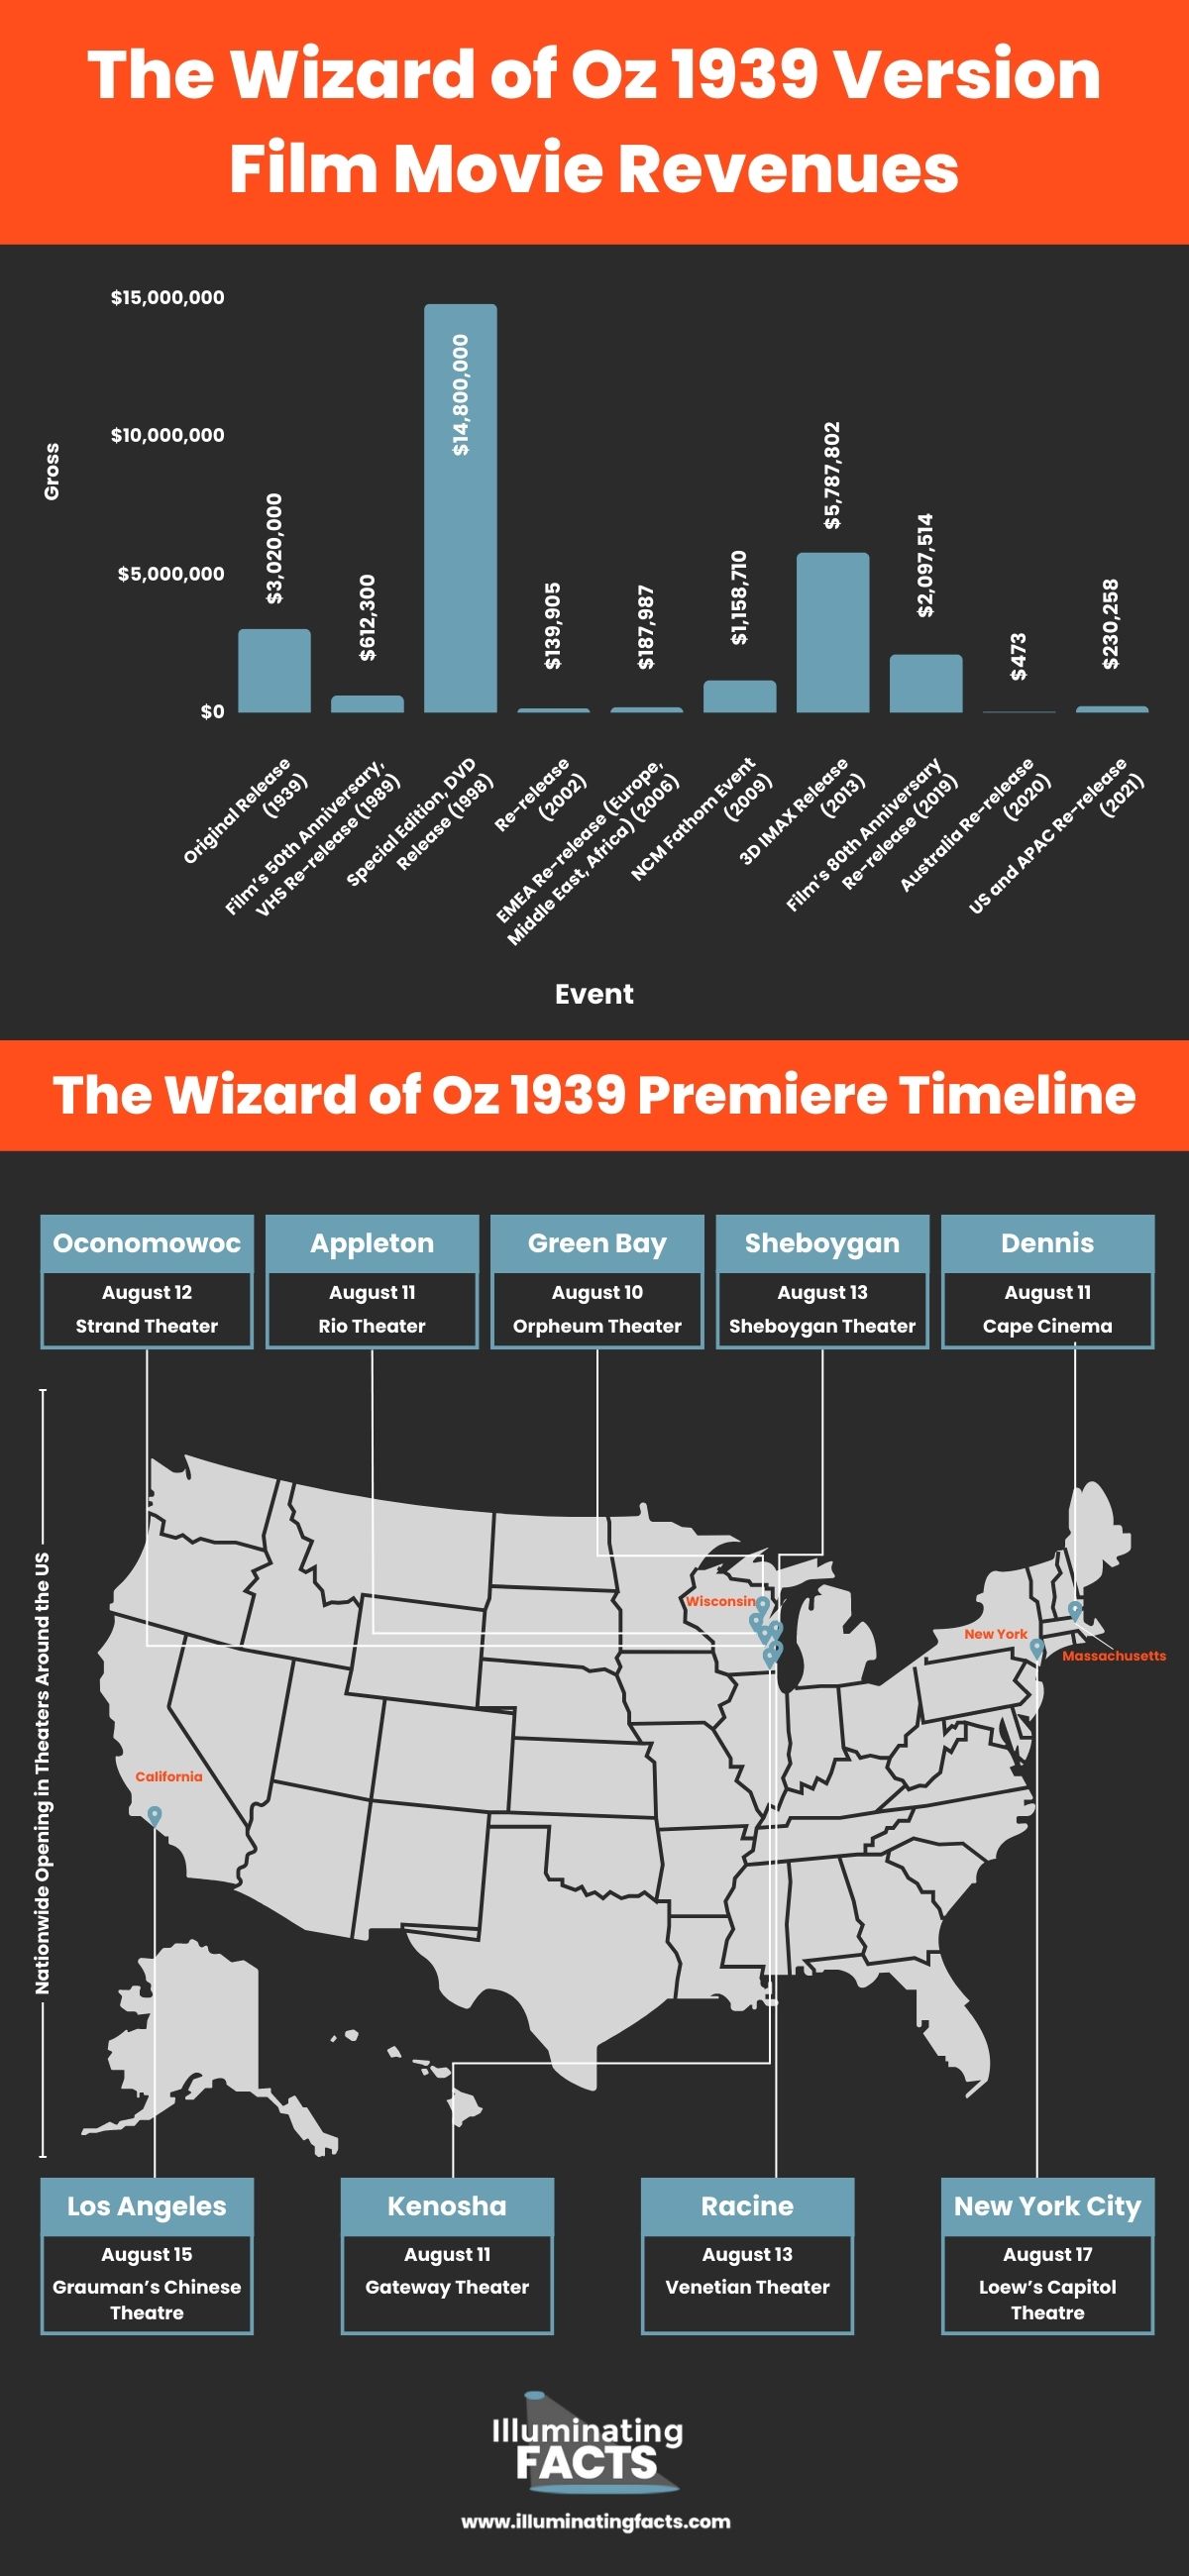 The Wizard of Oz 1939 Version Film Movie Revenues